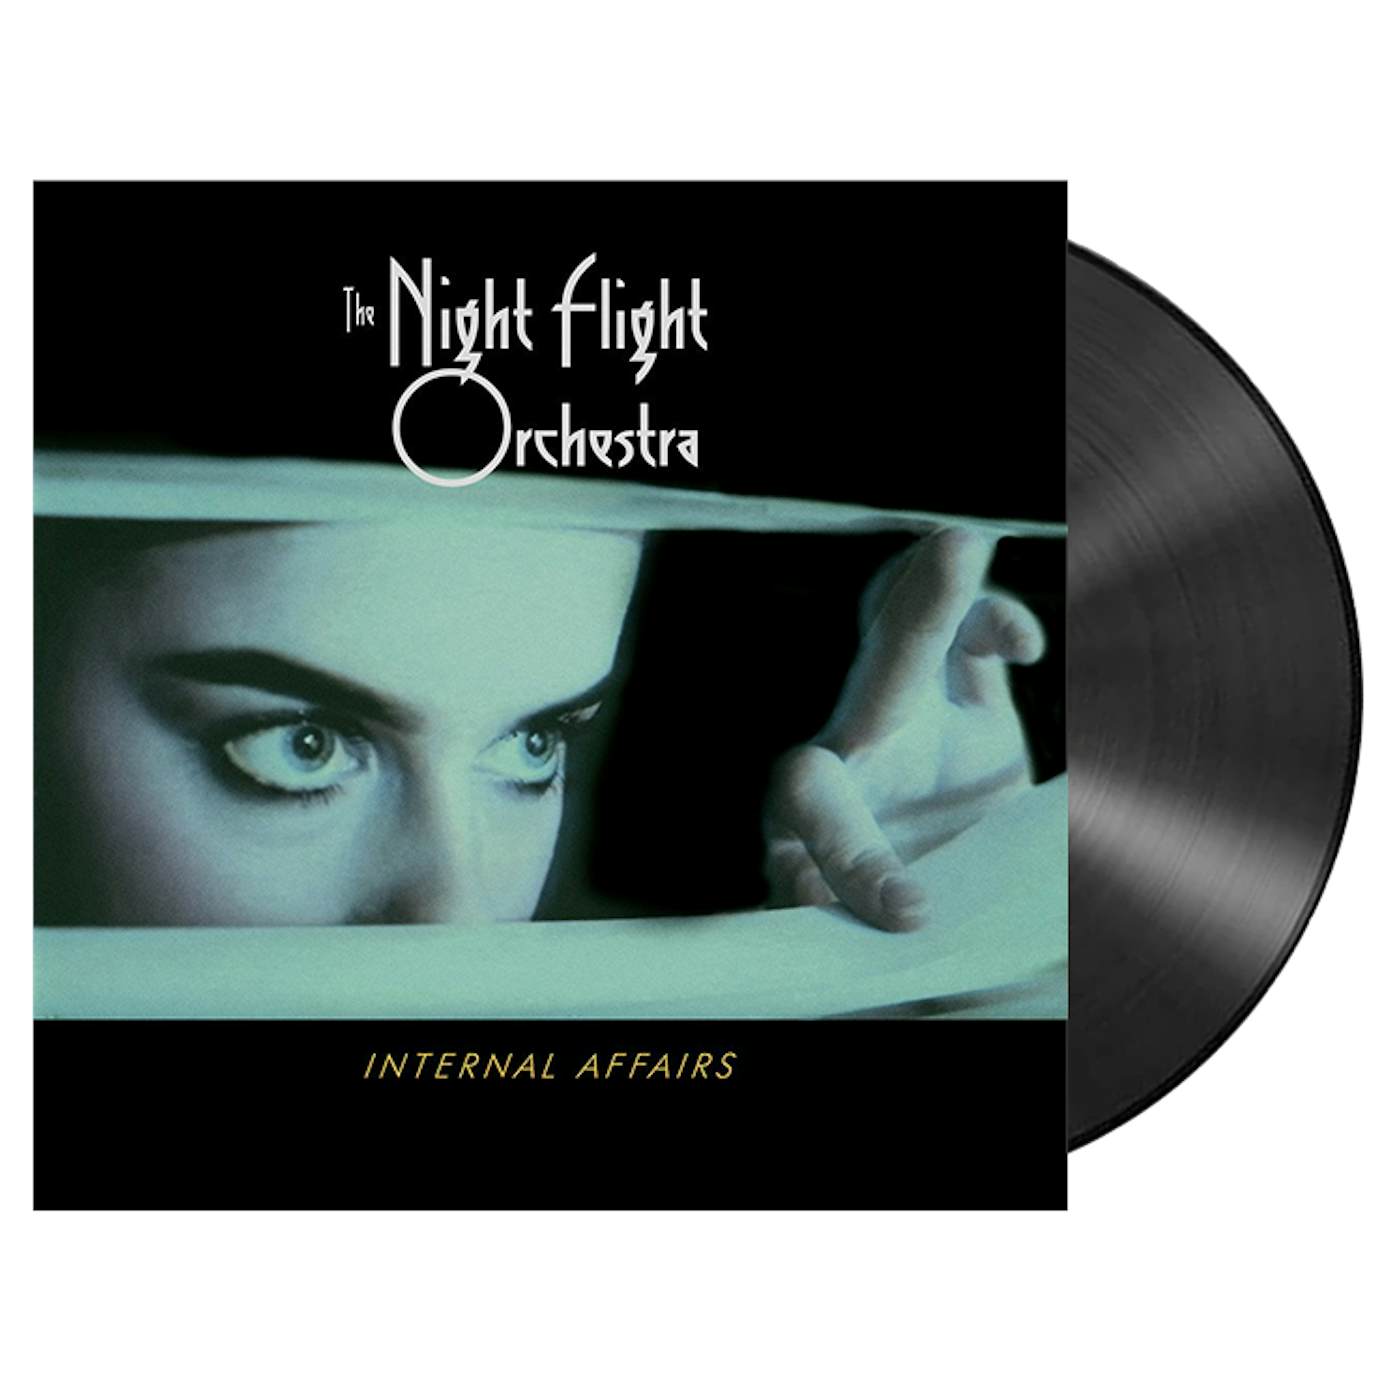 THE NIGHT FLIGHT ORCHESTRA - 'Internal Affairs' 2xLP (Vinyl)